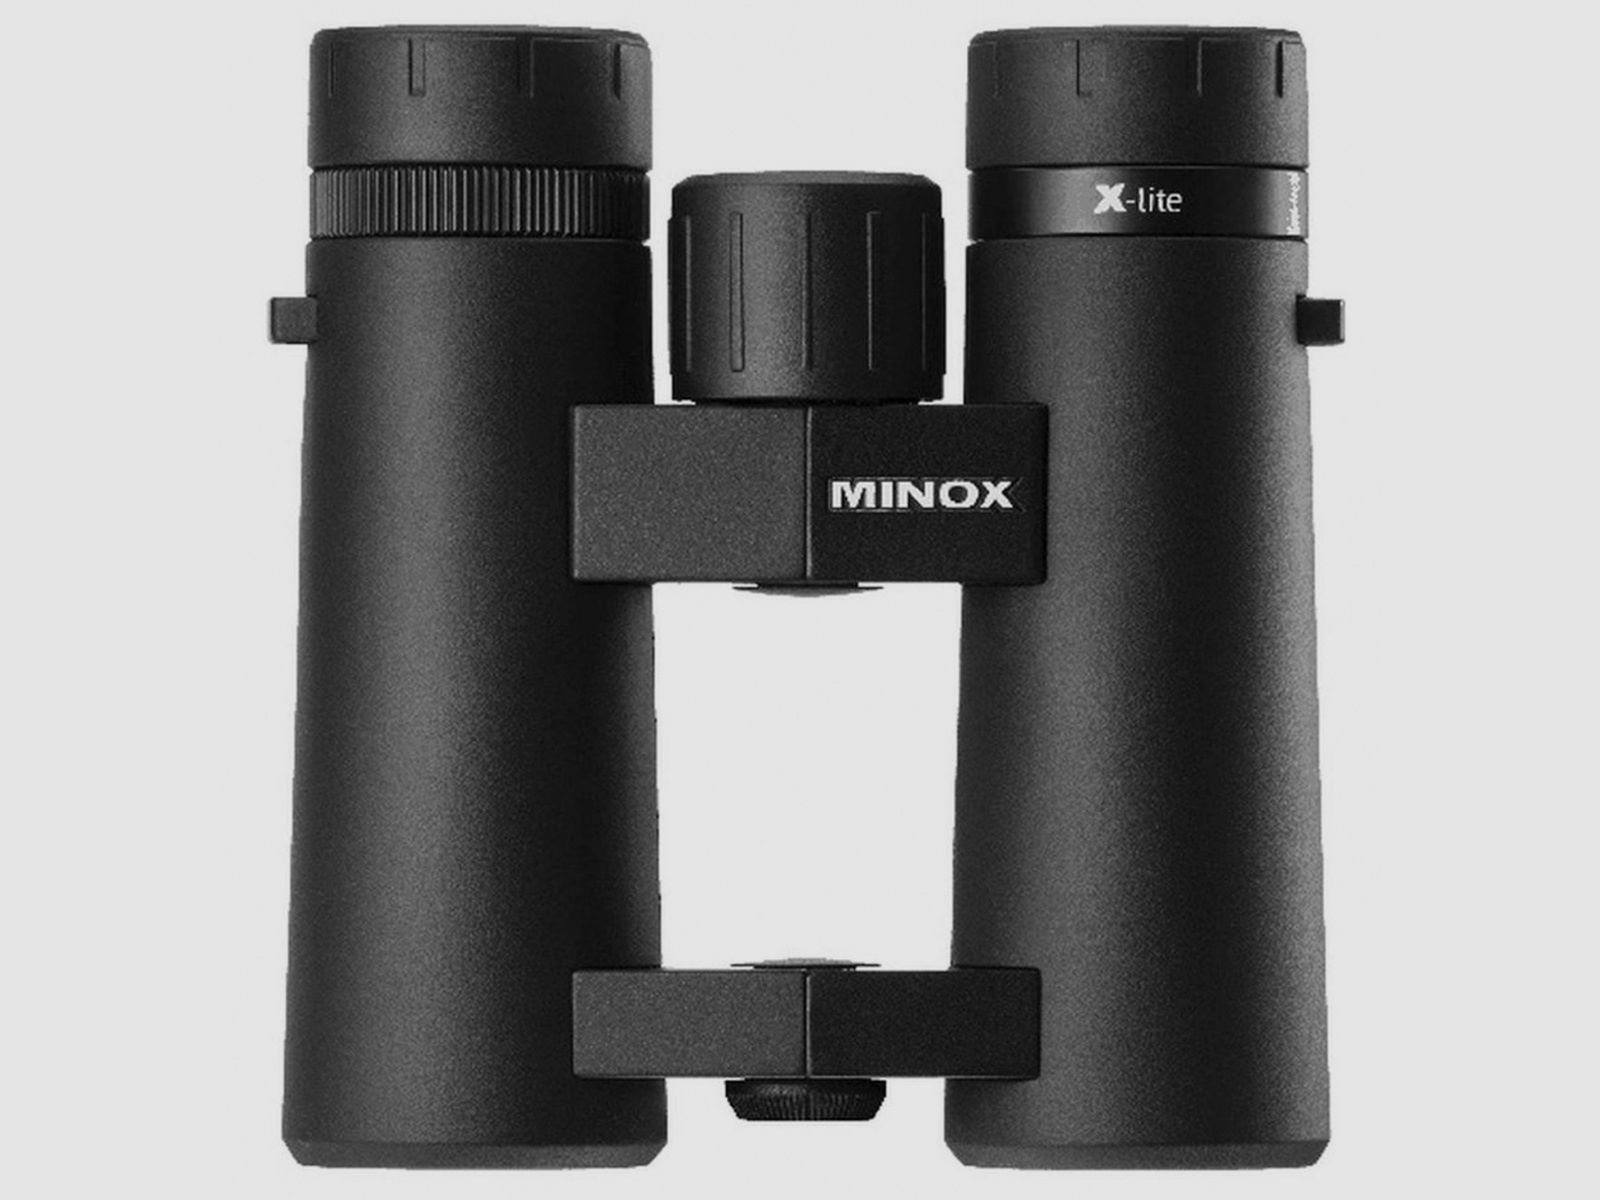 Minox Minox X-lite 10x26 -10,90€ 10% Fernglas Rabatt 98,10 Effektivpreis